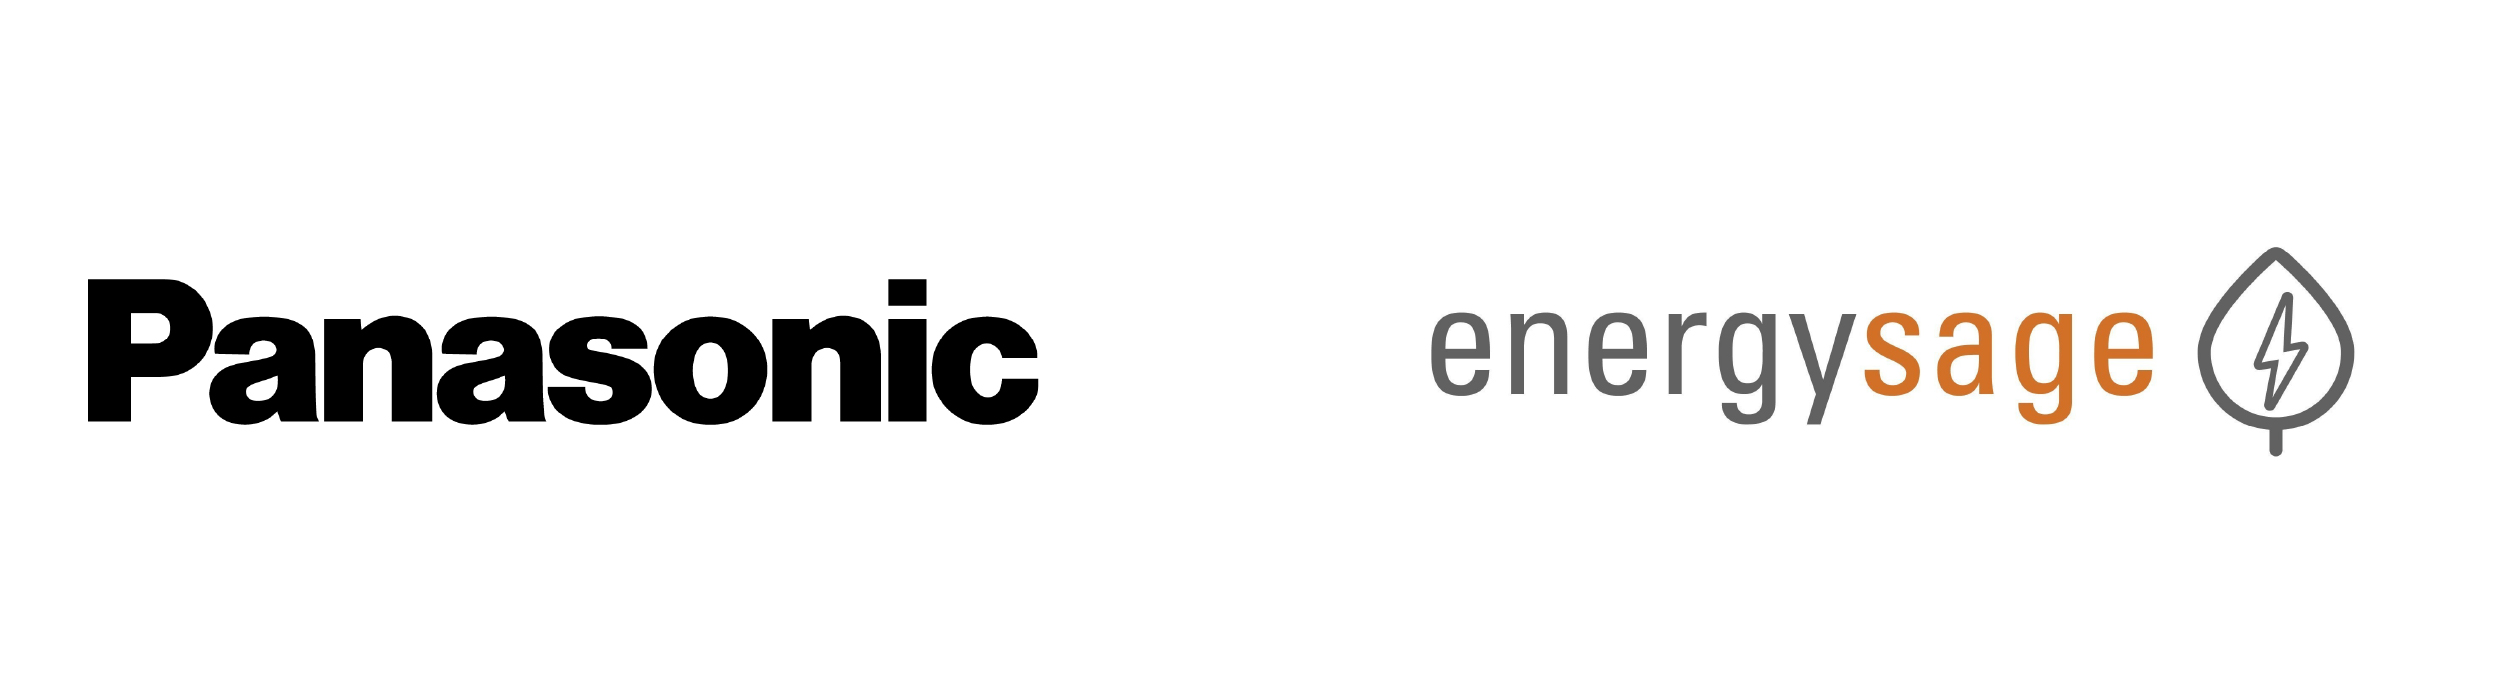 panasonic energysage logo image